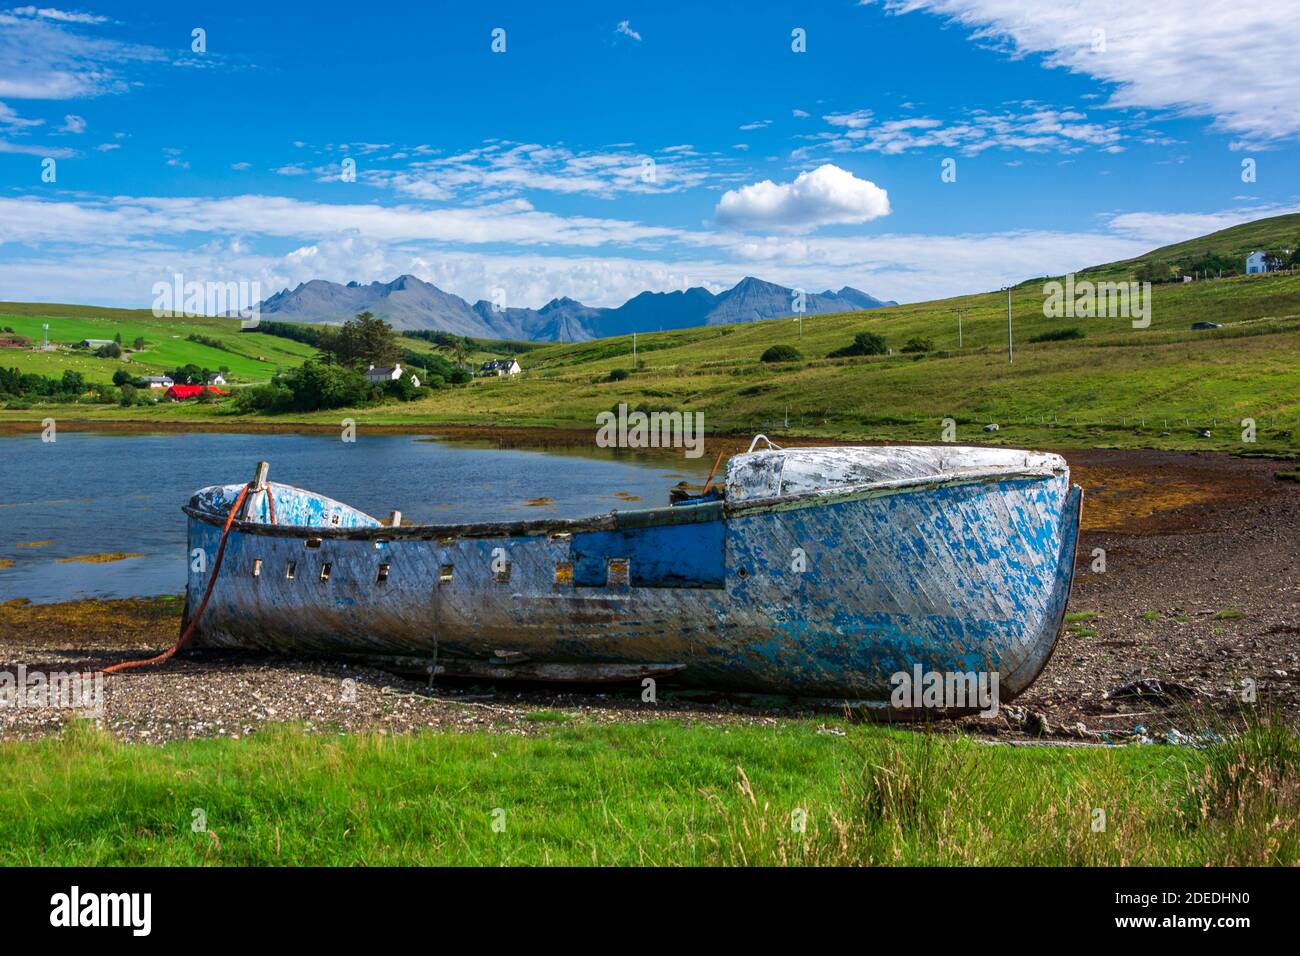 Boat wreck, Carbost, Isle of Skye, Scotland, United Kingdom Stock Photo